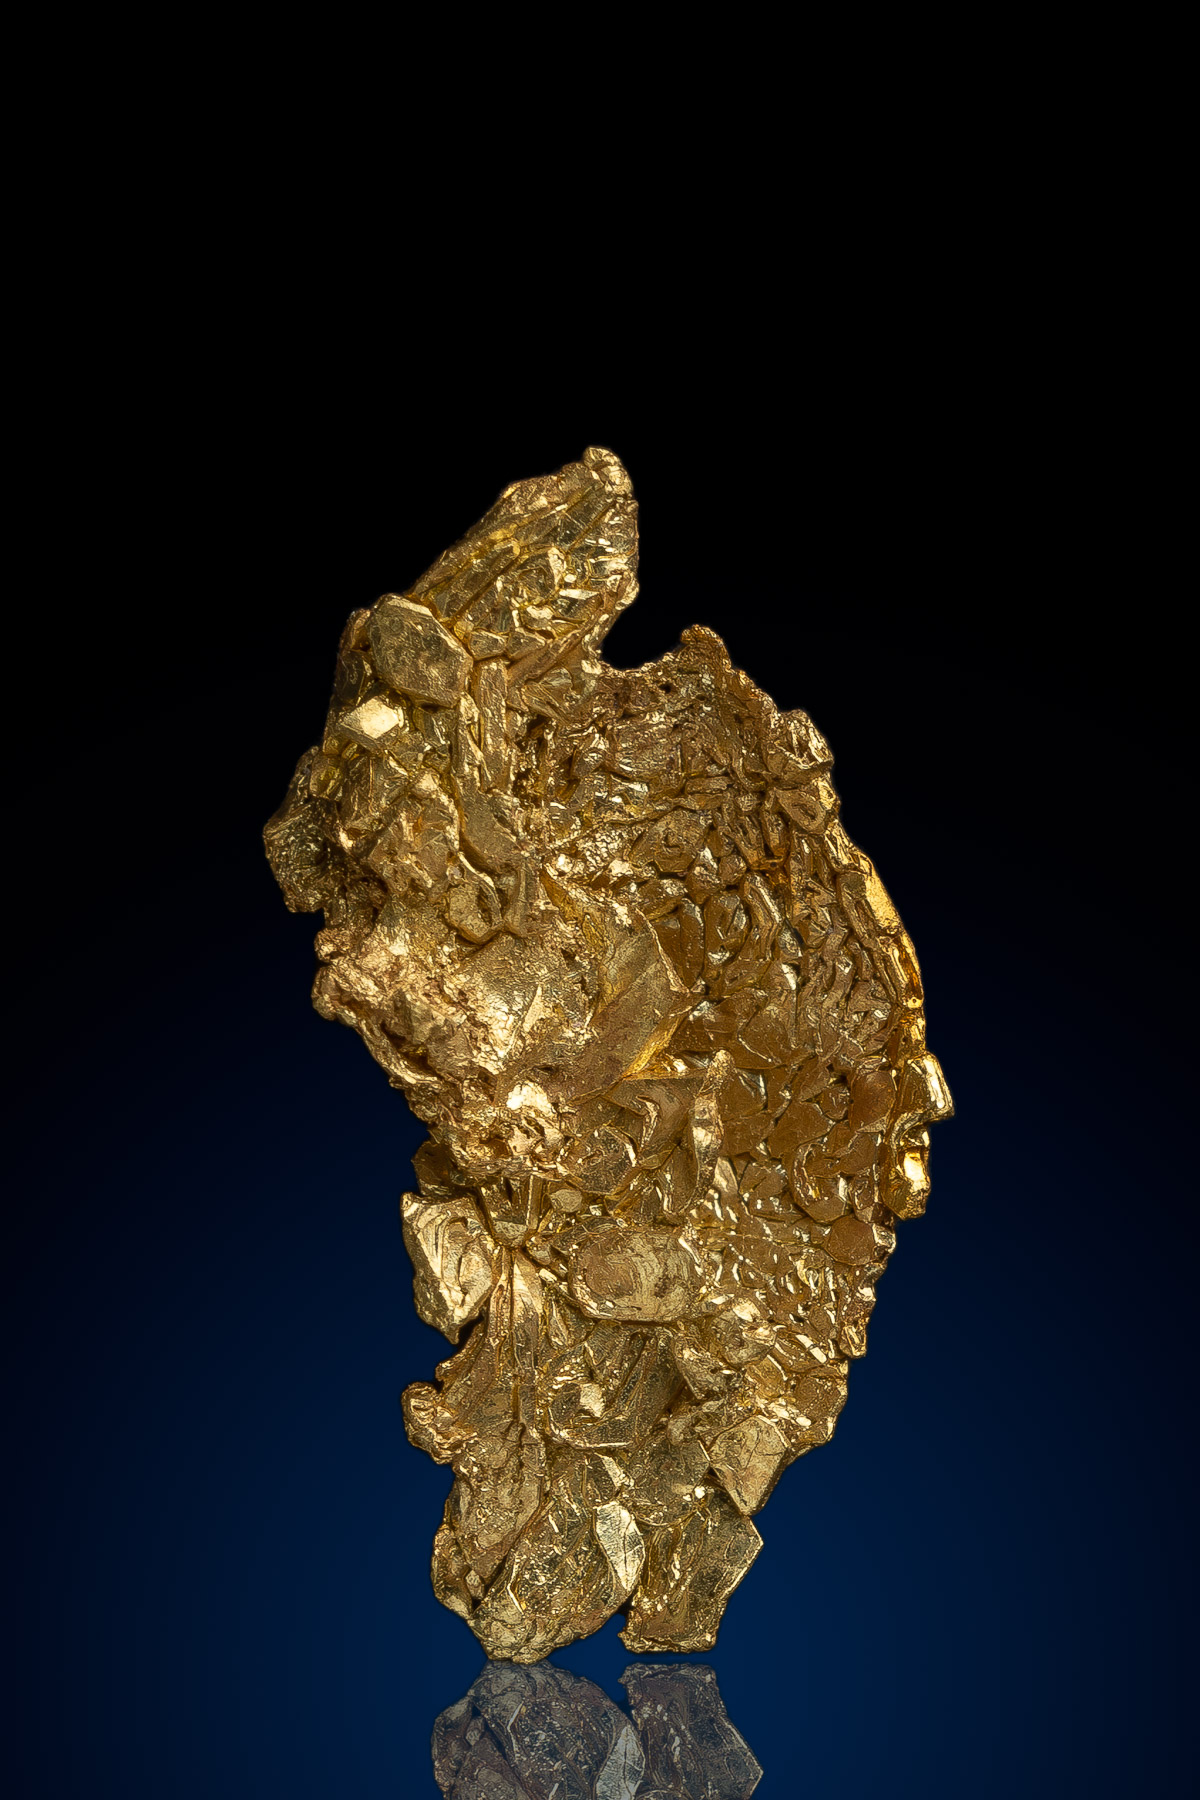 Layered and Sharp - Natural Gold Crystal from Colorado